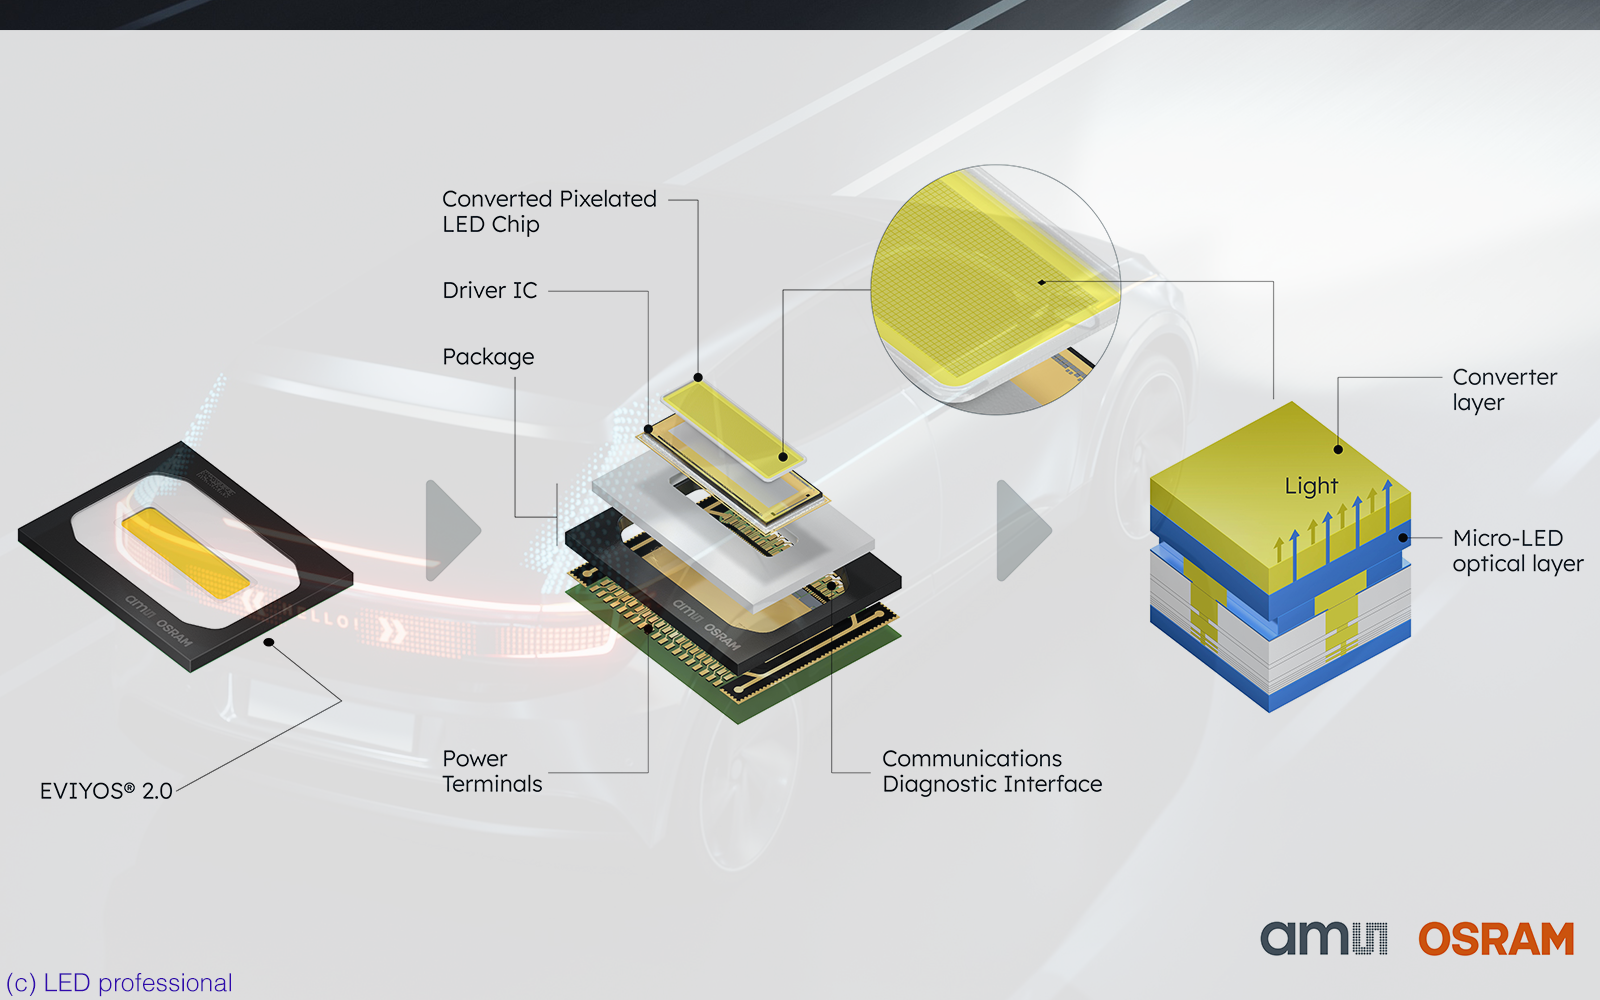 ams OSRAM Launches Intelligent Multipixel EVIYOS® 2.0 LED for